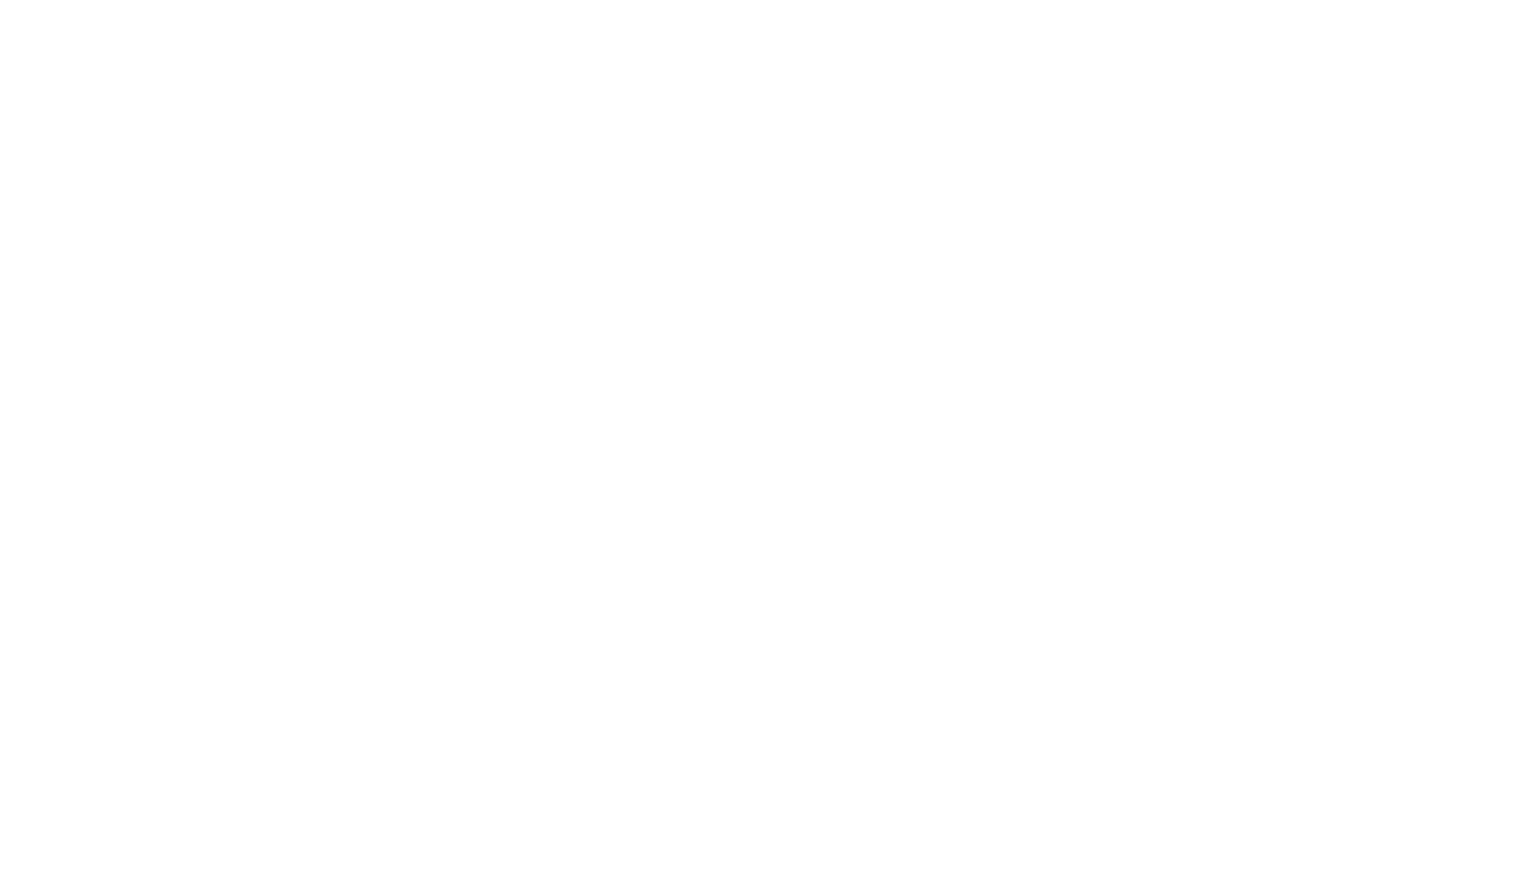 RAK Ceramics logo large for dark backgrounds (transparent PNG)